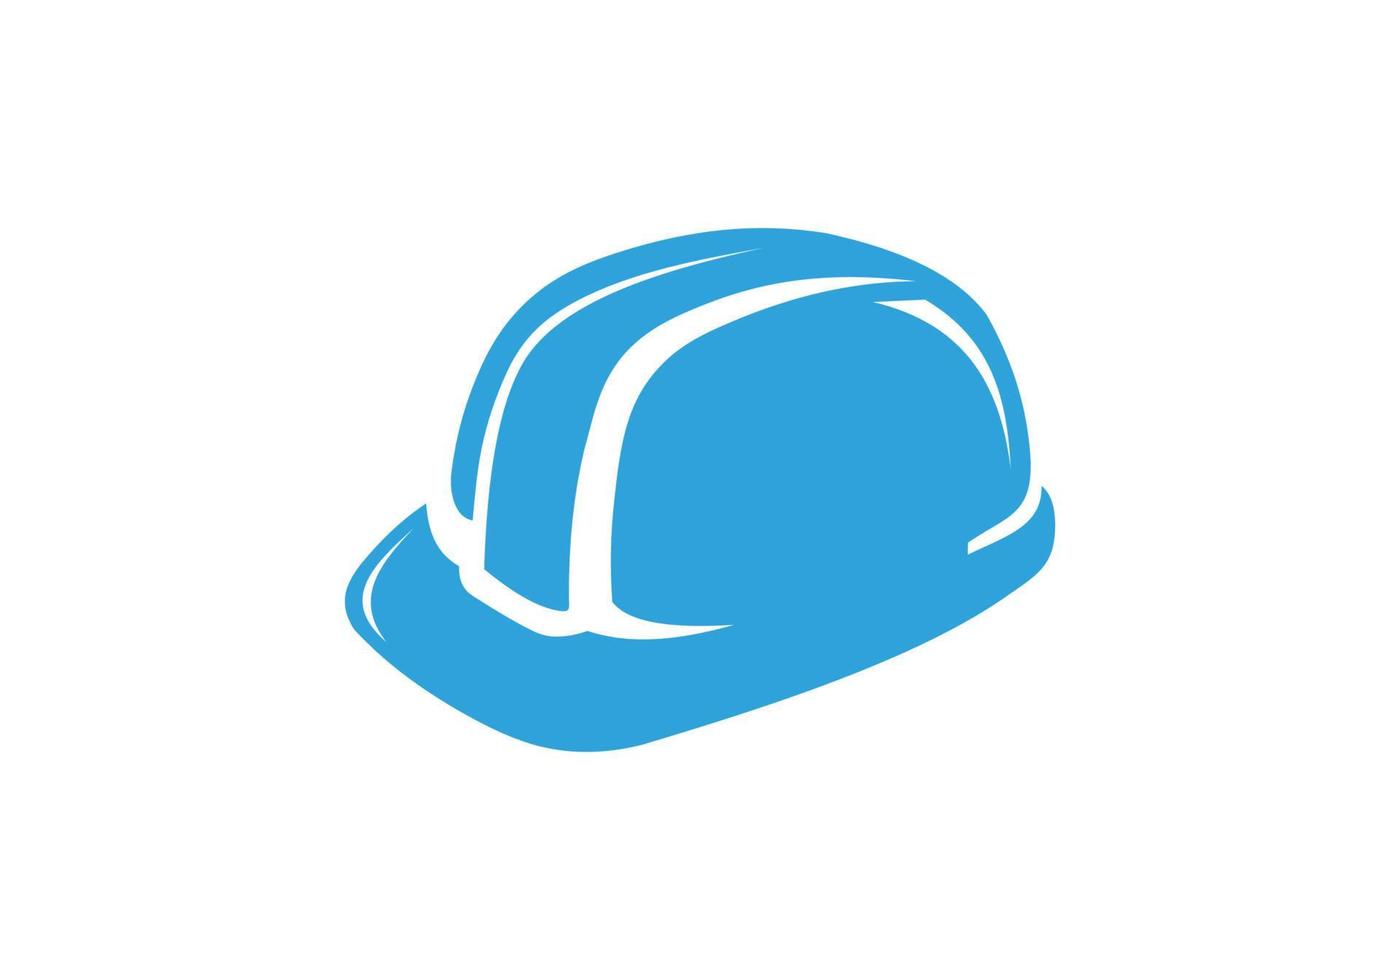 helmet safety logo icon design inspiration vector